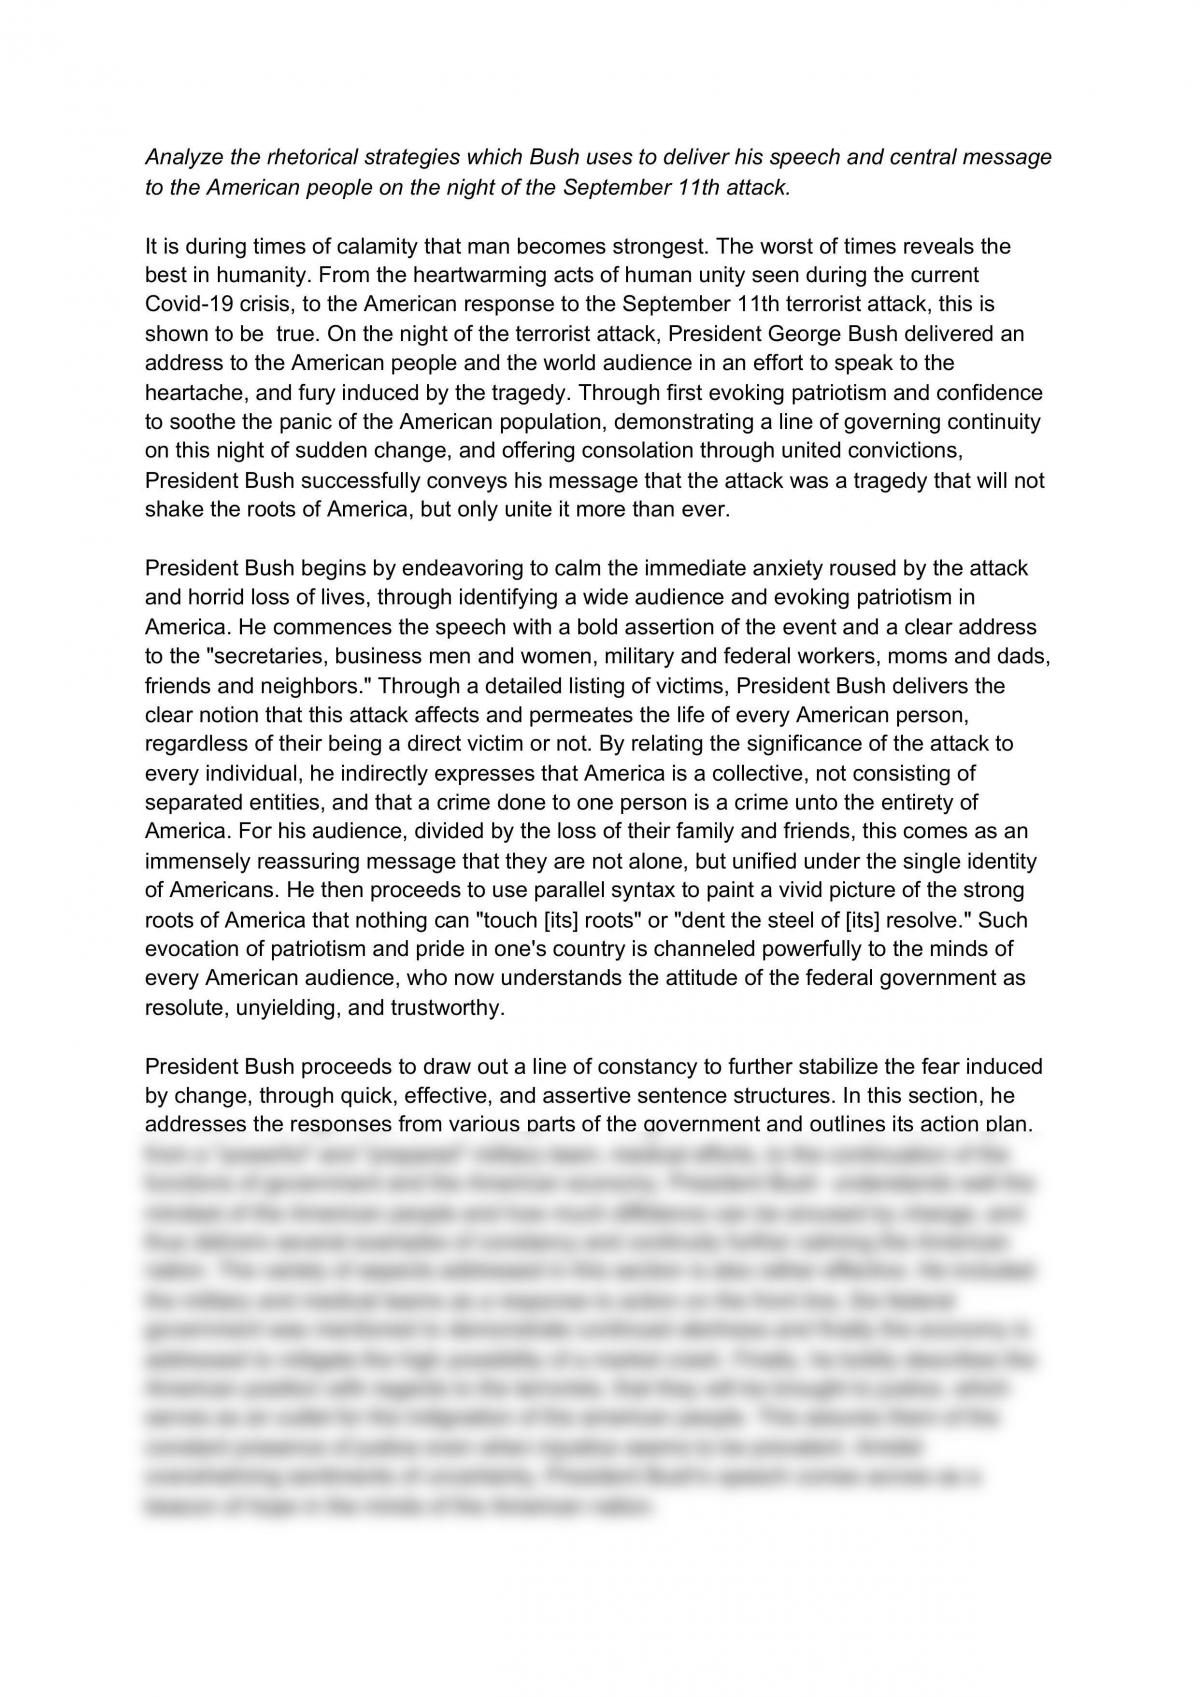 Bush Rhetorical Analysis - Page 1